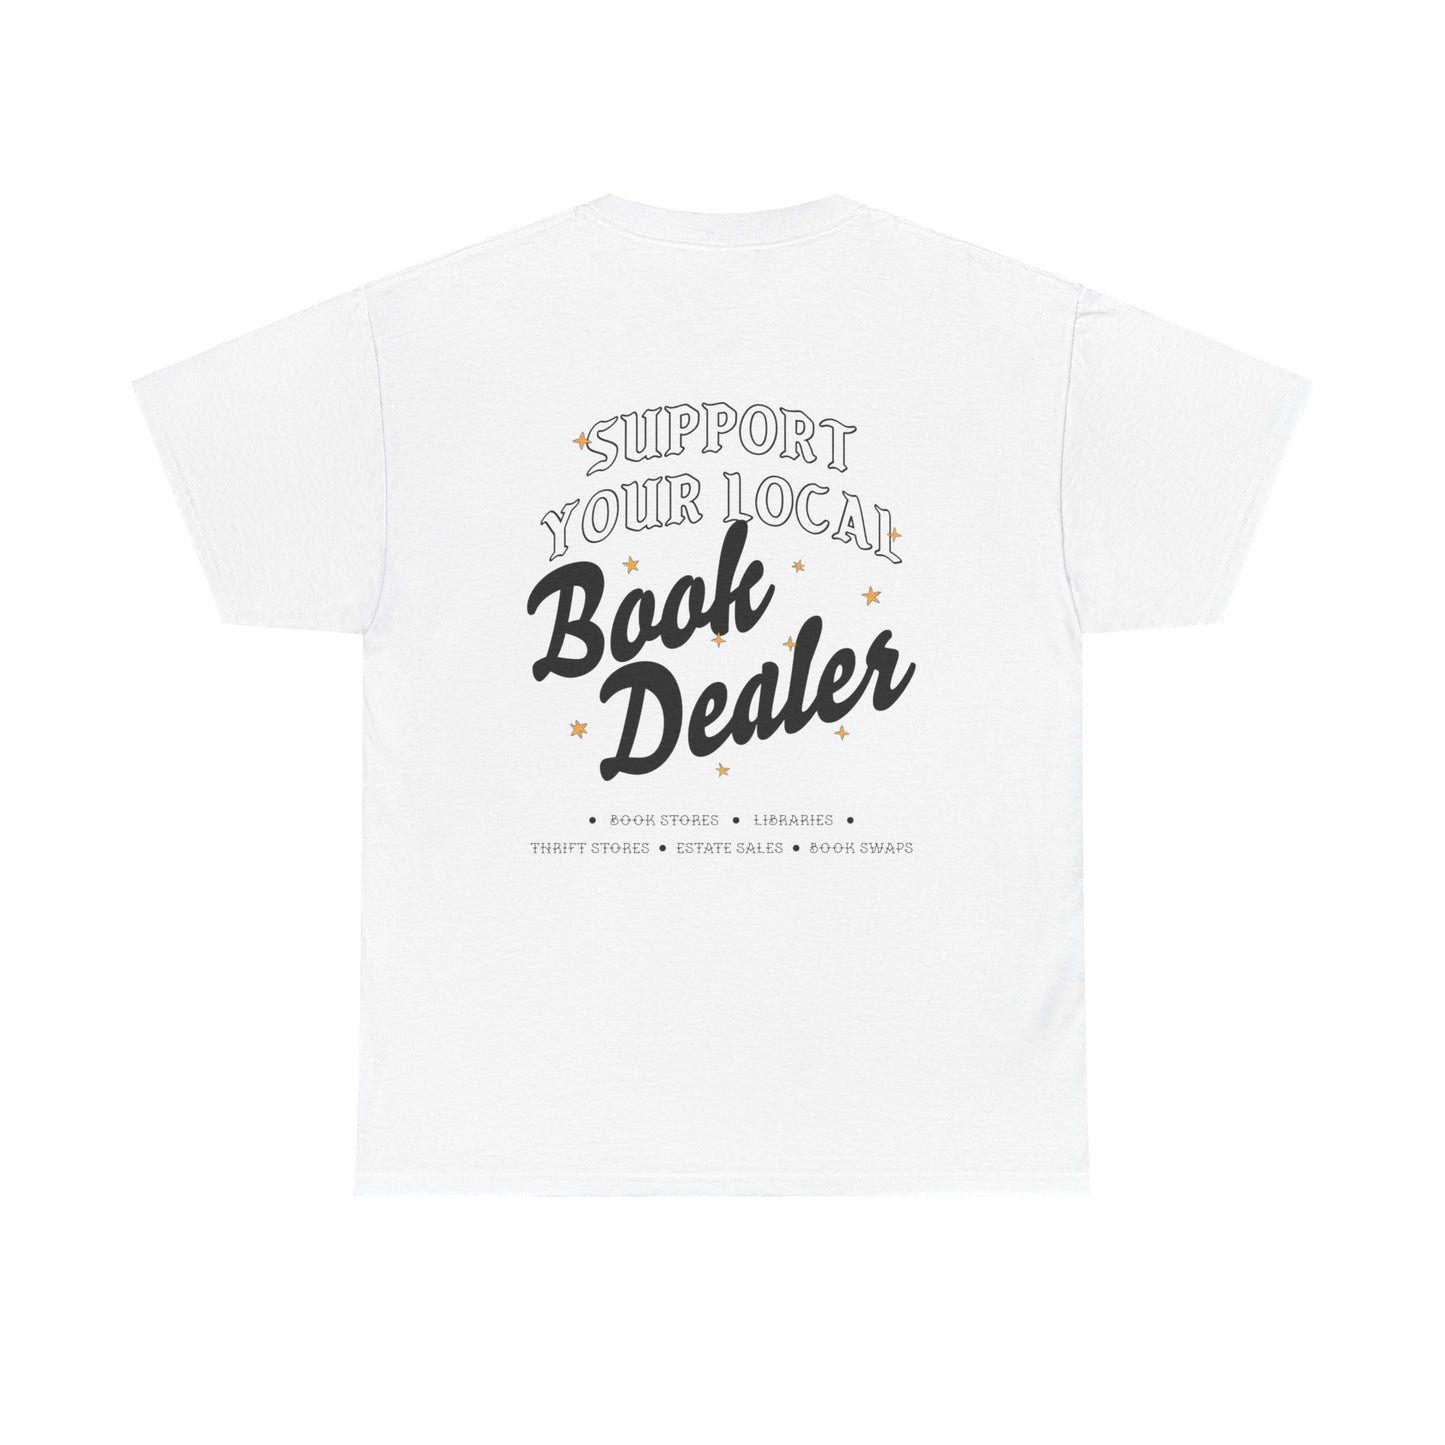 Book Dealer Tee